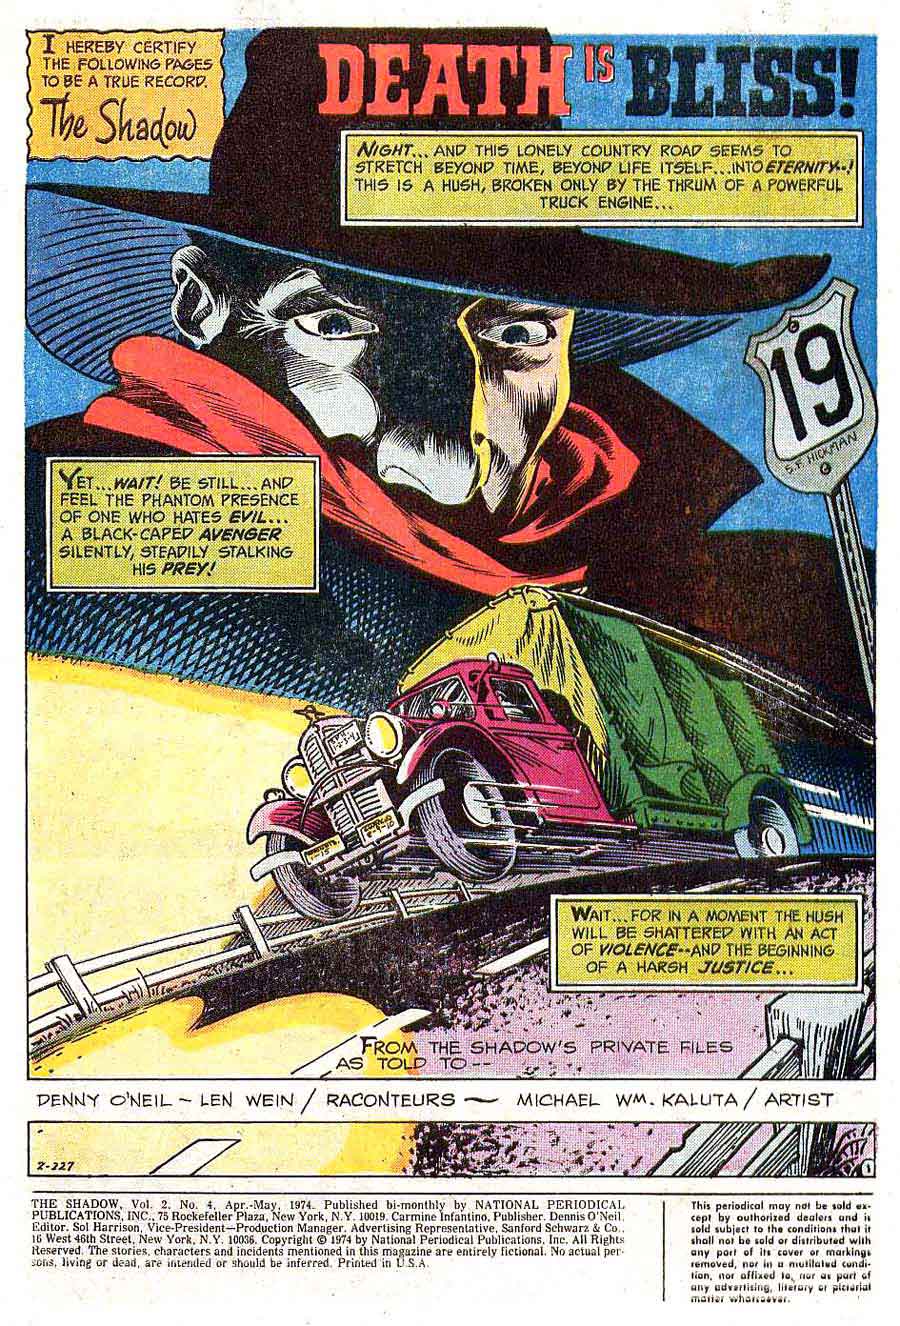 The Shadow v2 #4 - Bernie Wrightson dc 1970s bronze age comic book page art